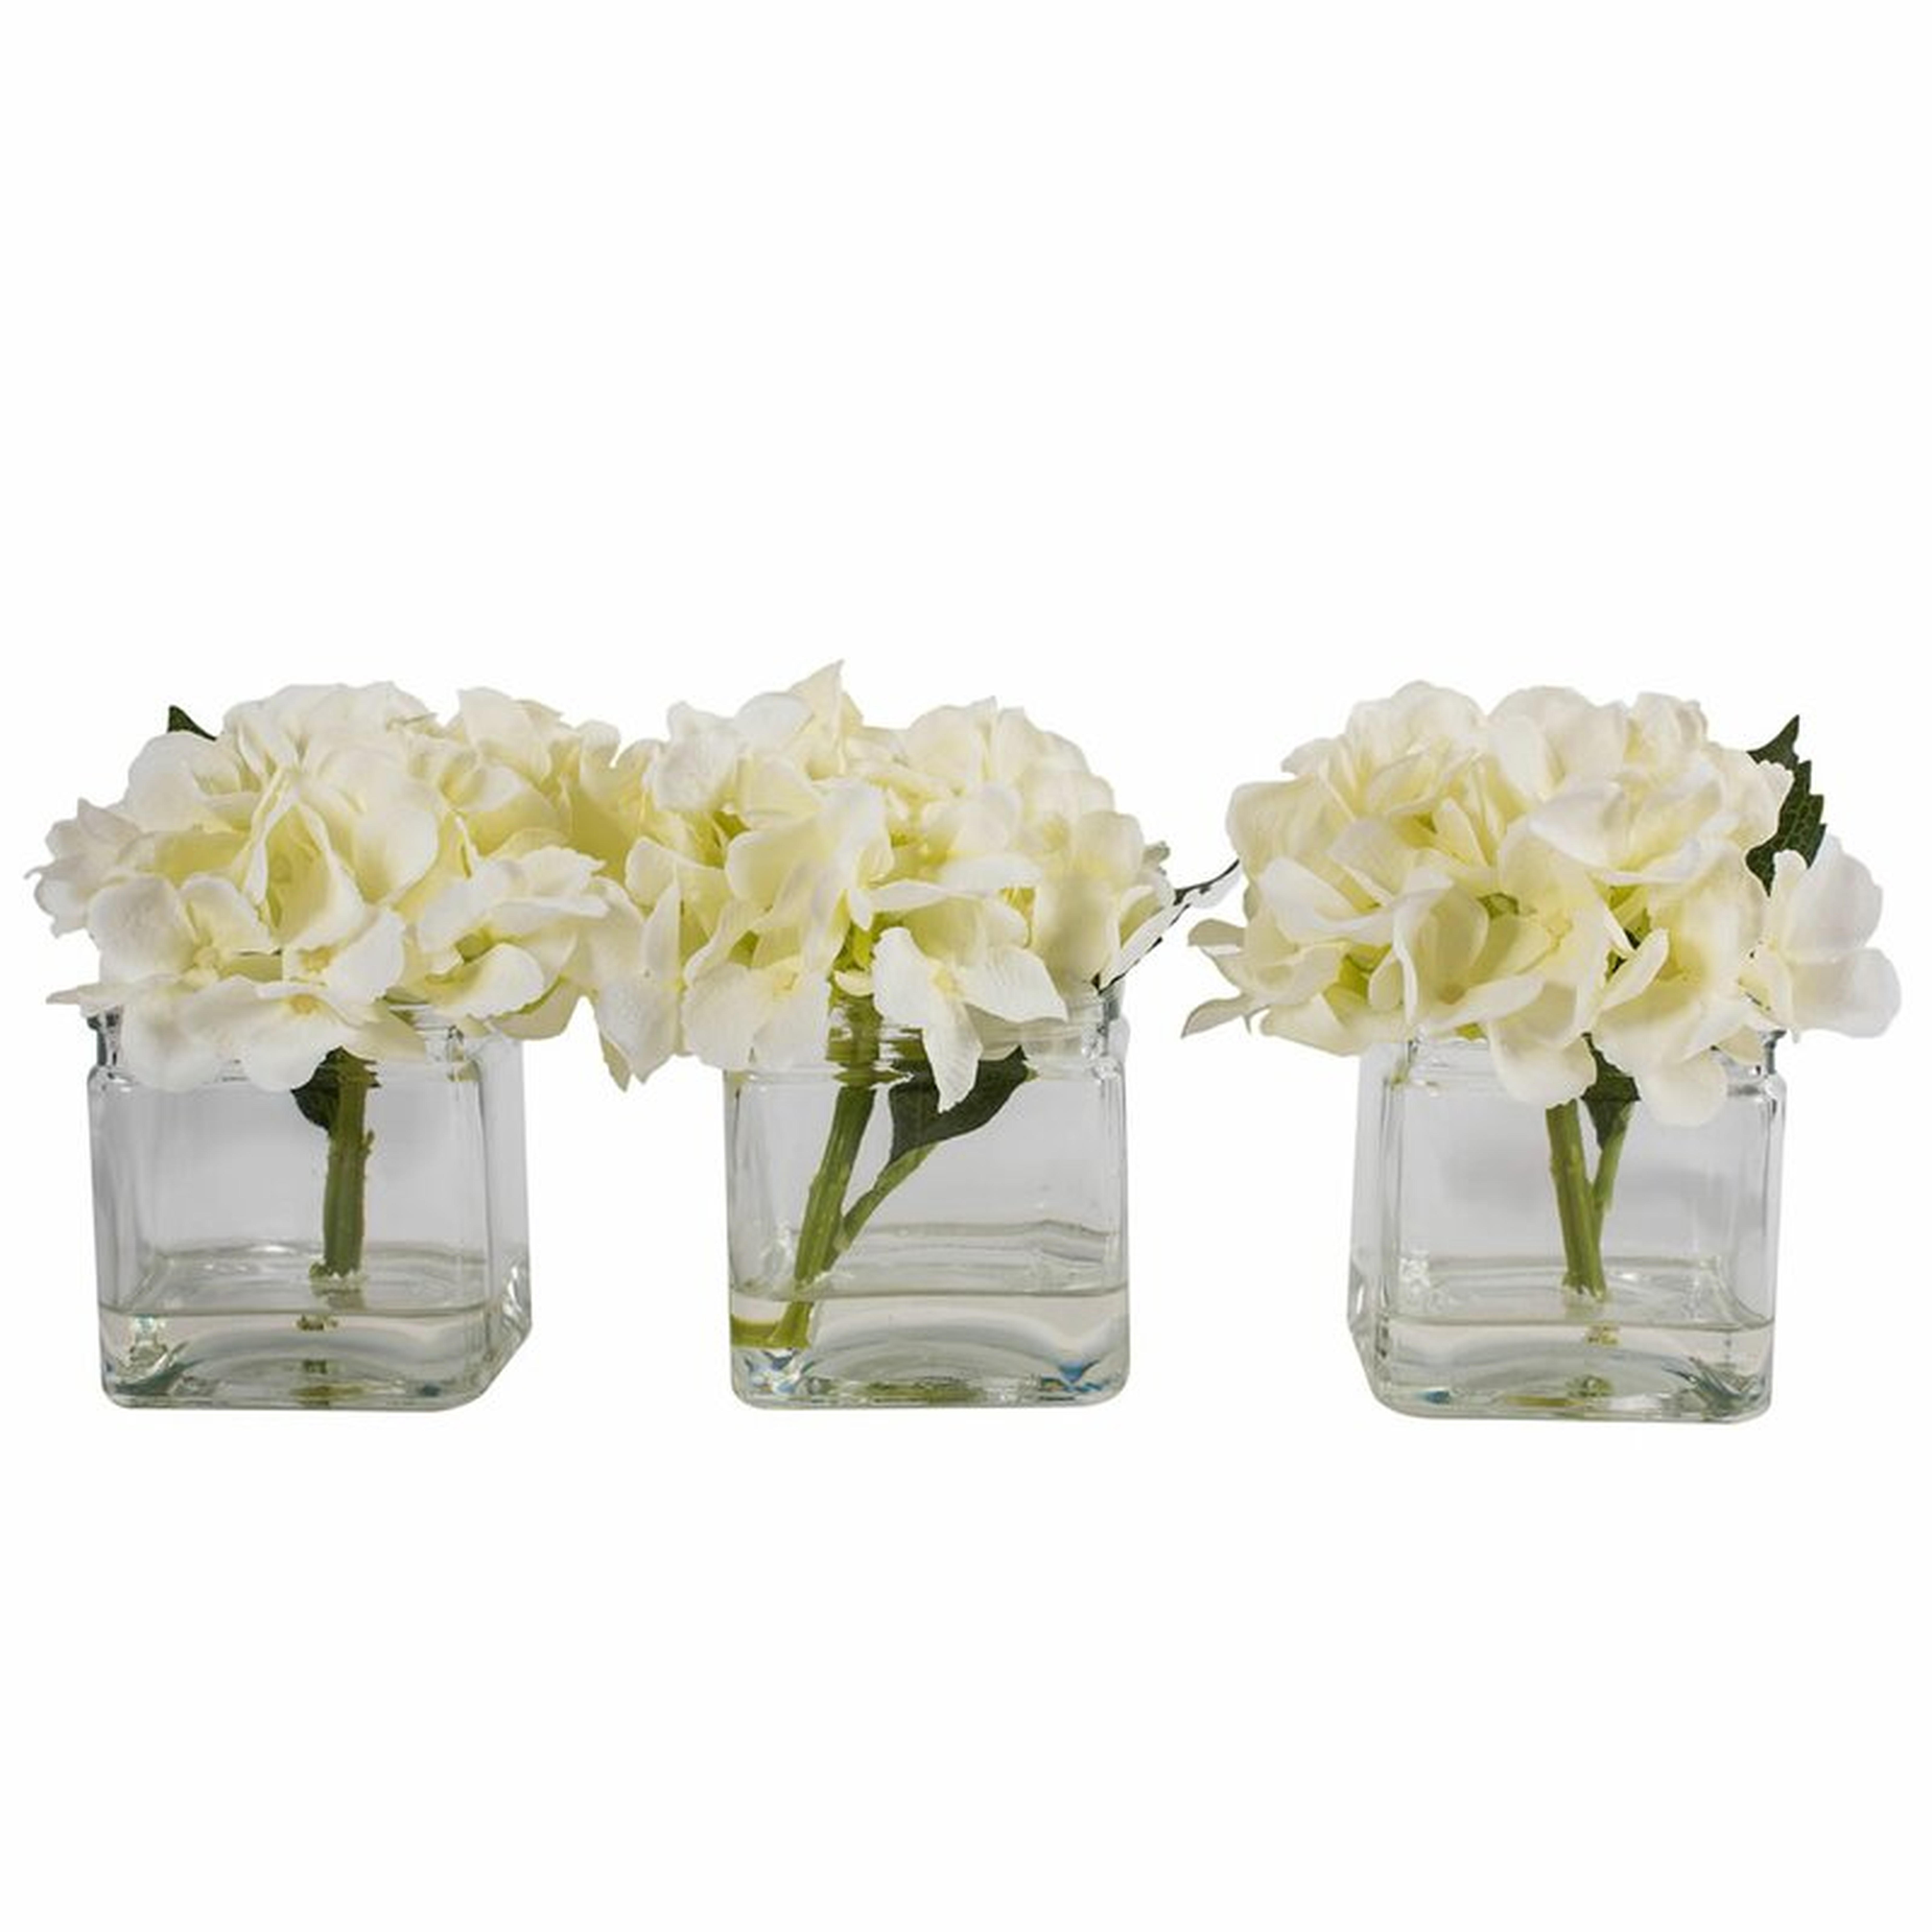 Hydrangeas Floral Arrangements and Centerpieces in Vase - Wayfair